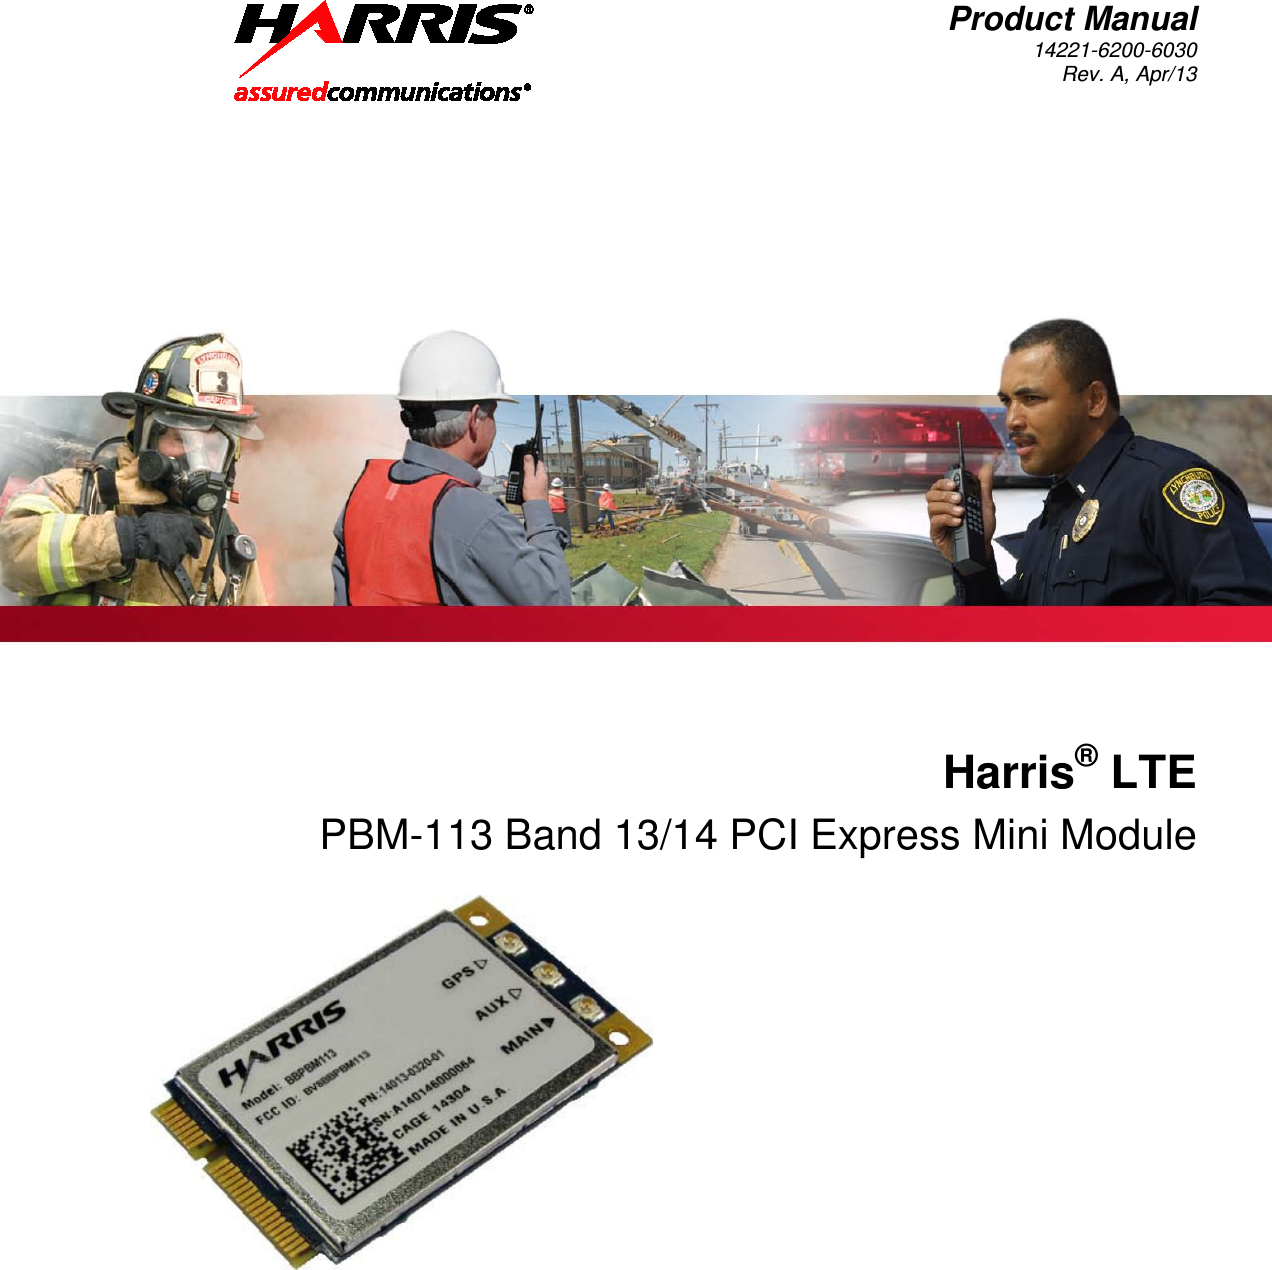  Product Manual 14221-6200-6030 Rev. A, Apr/13    Harris® LTE PBM-113 Band 13/14 PCI Express Mini Module    